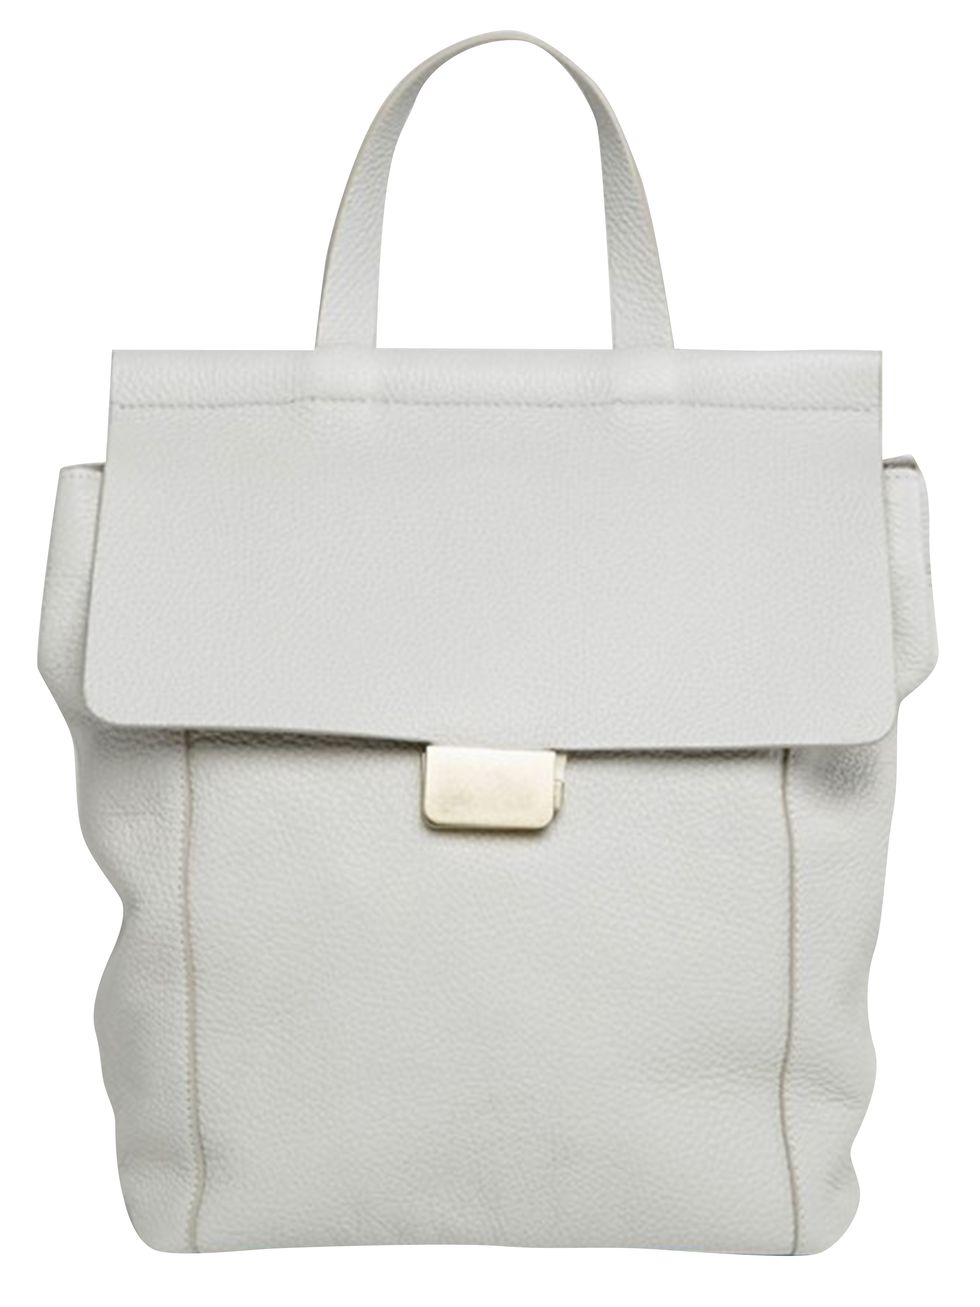 Handbag, Bag, White, Fashion accessory, Shoulder bag, Beige, Leather, Tote bag, Luggage and bags, Satchel, 